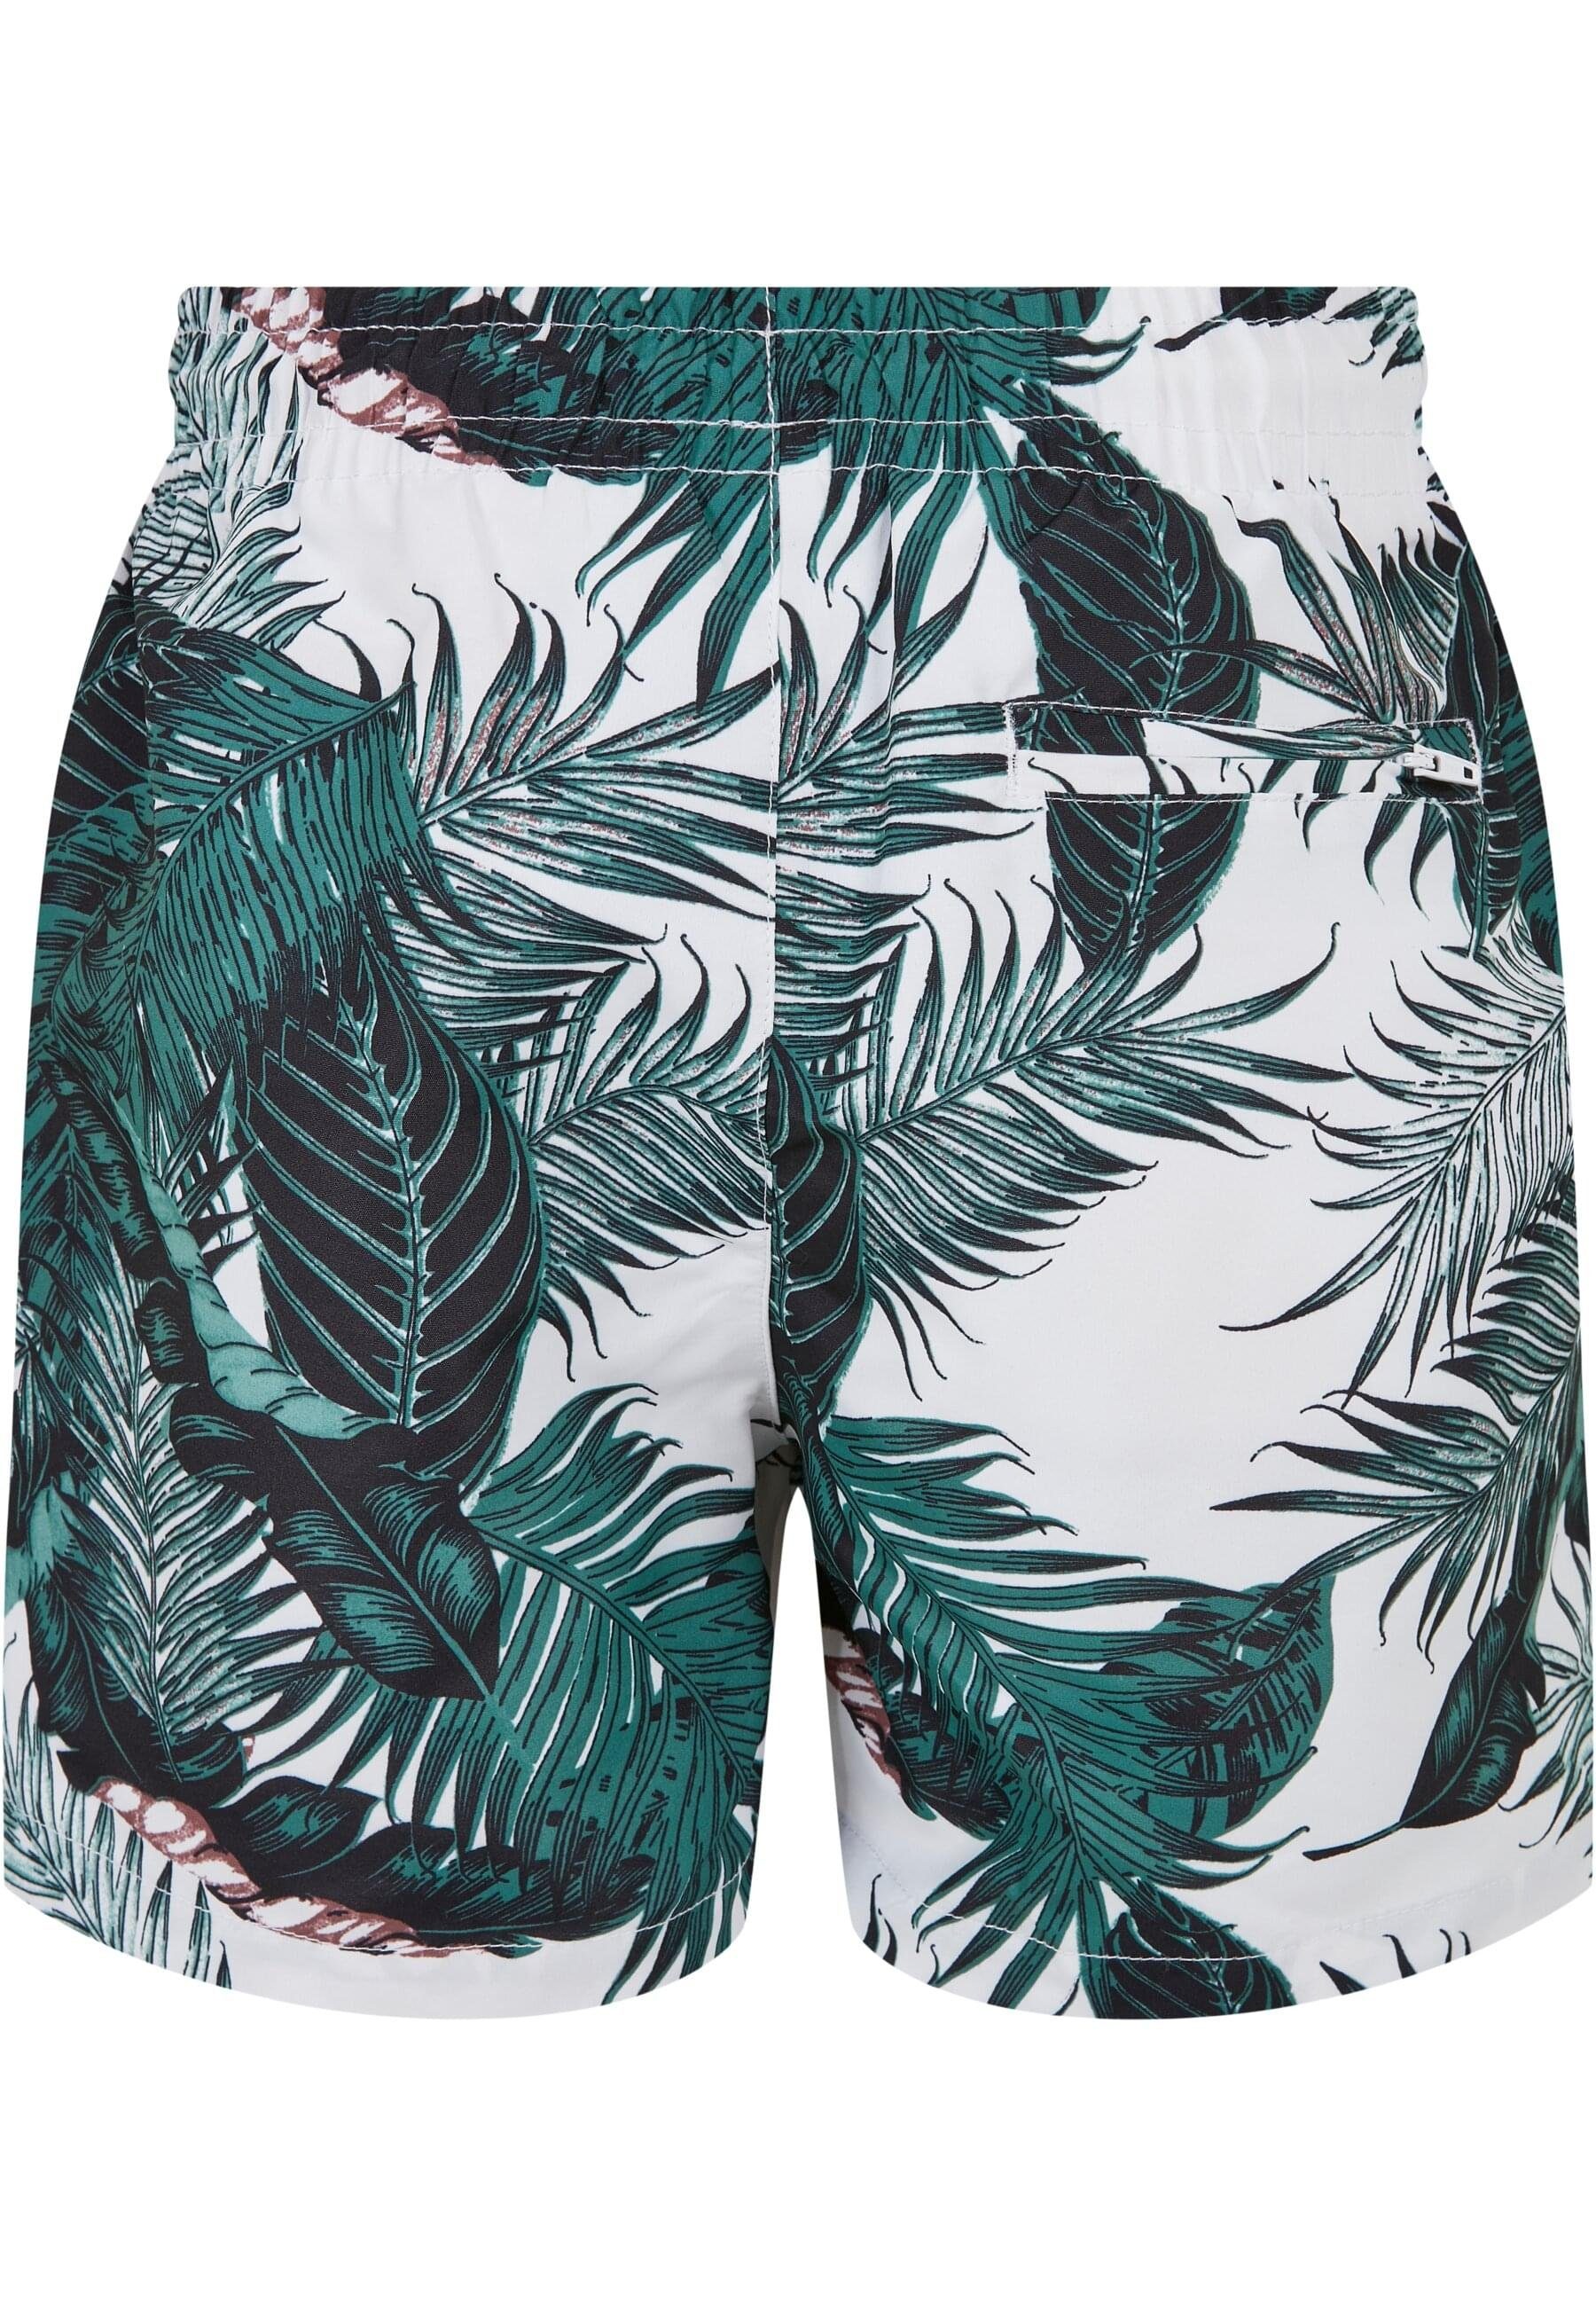 palm URBAN Pattern Badeshorts Shorts Herren CLASSICS leaves Swim aop Boys